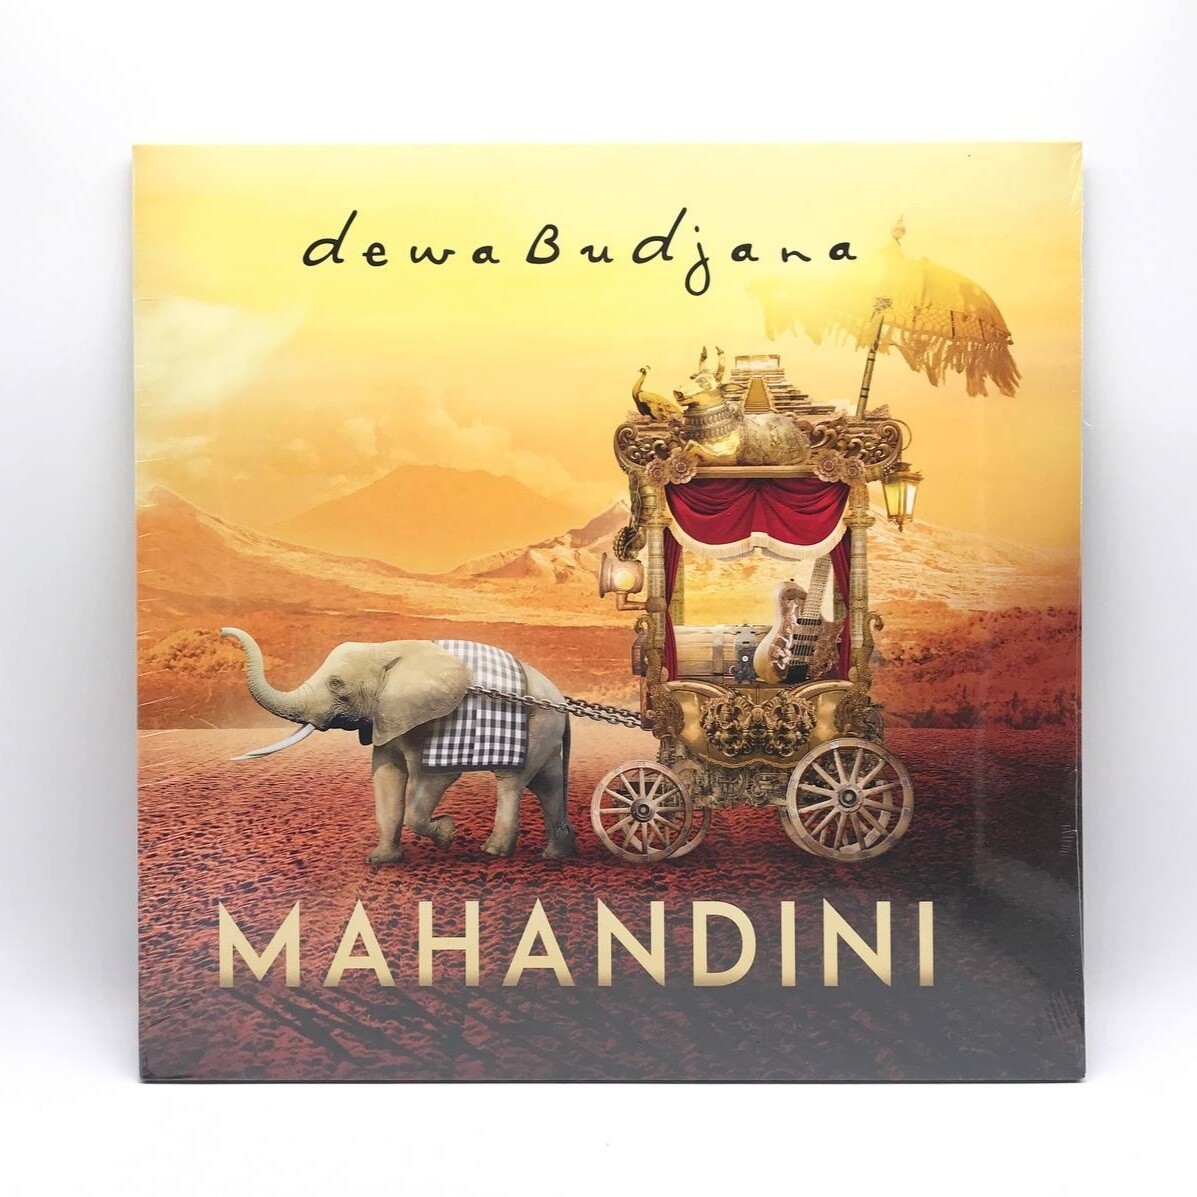 DEWA BUDJANA -MAHANDINI- LP